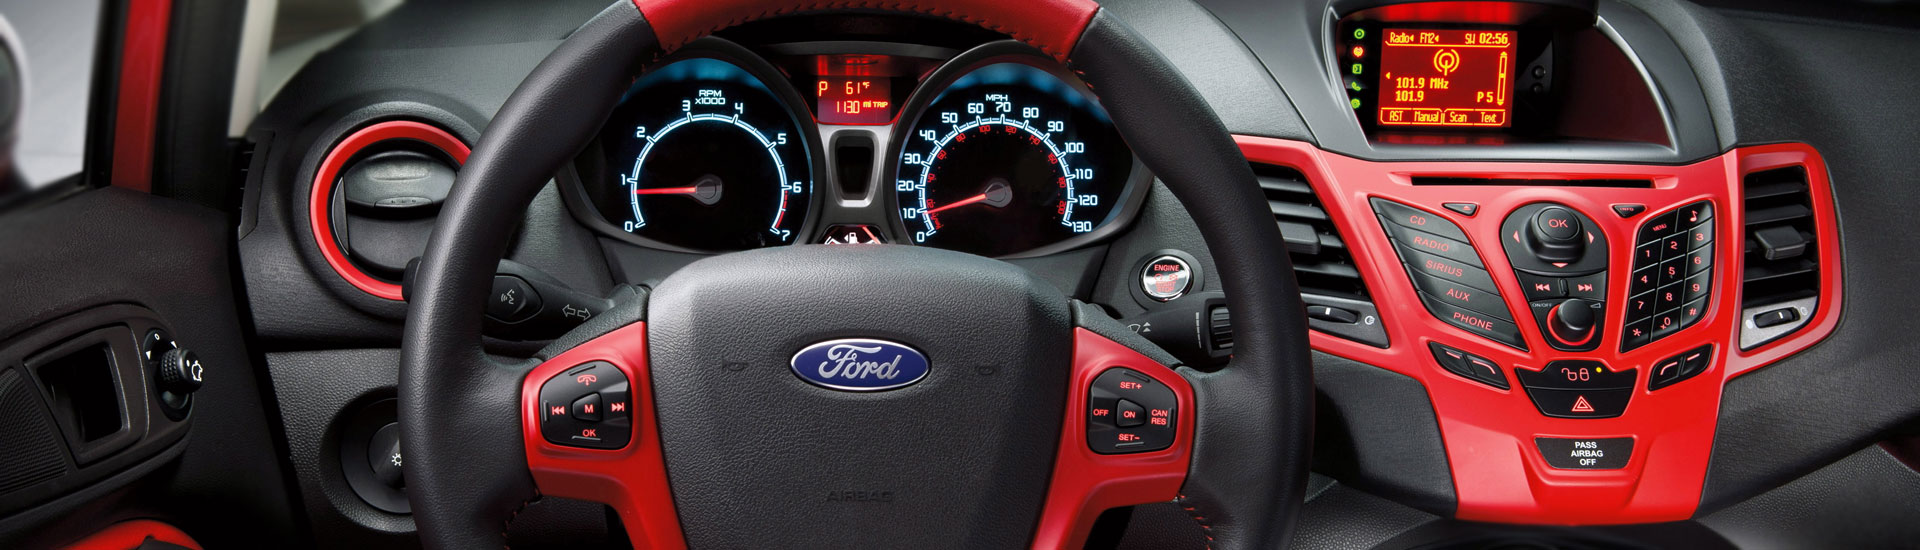 Ford Fiesta Custom Dash Kits